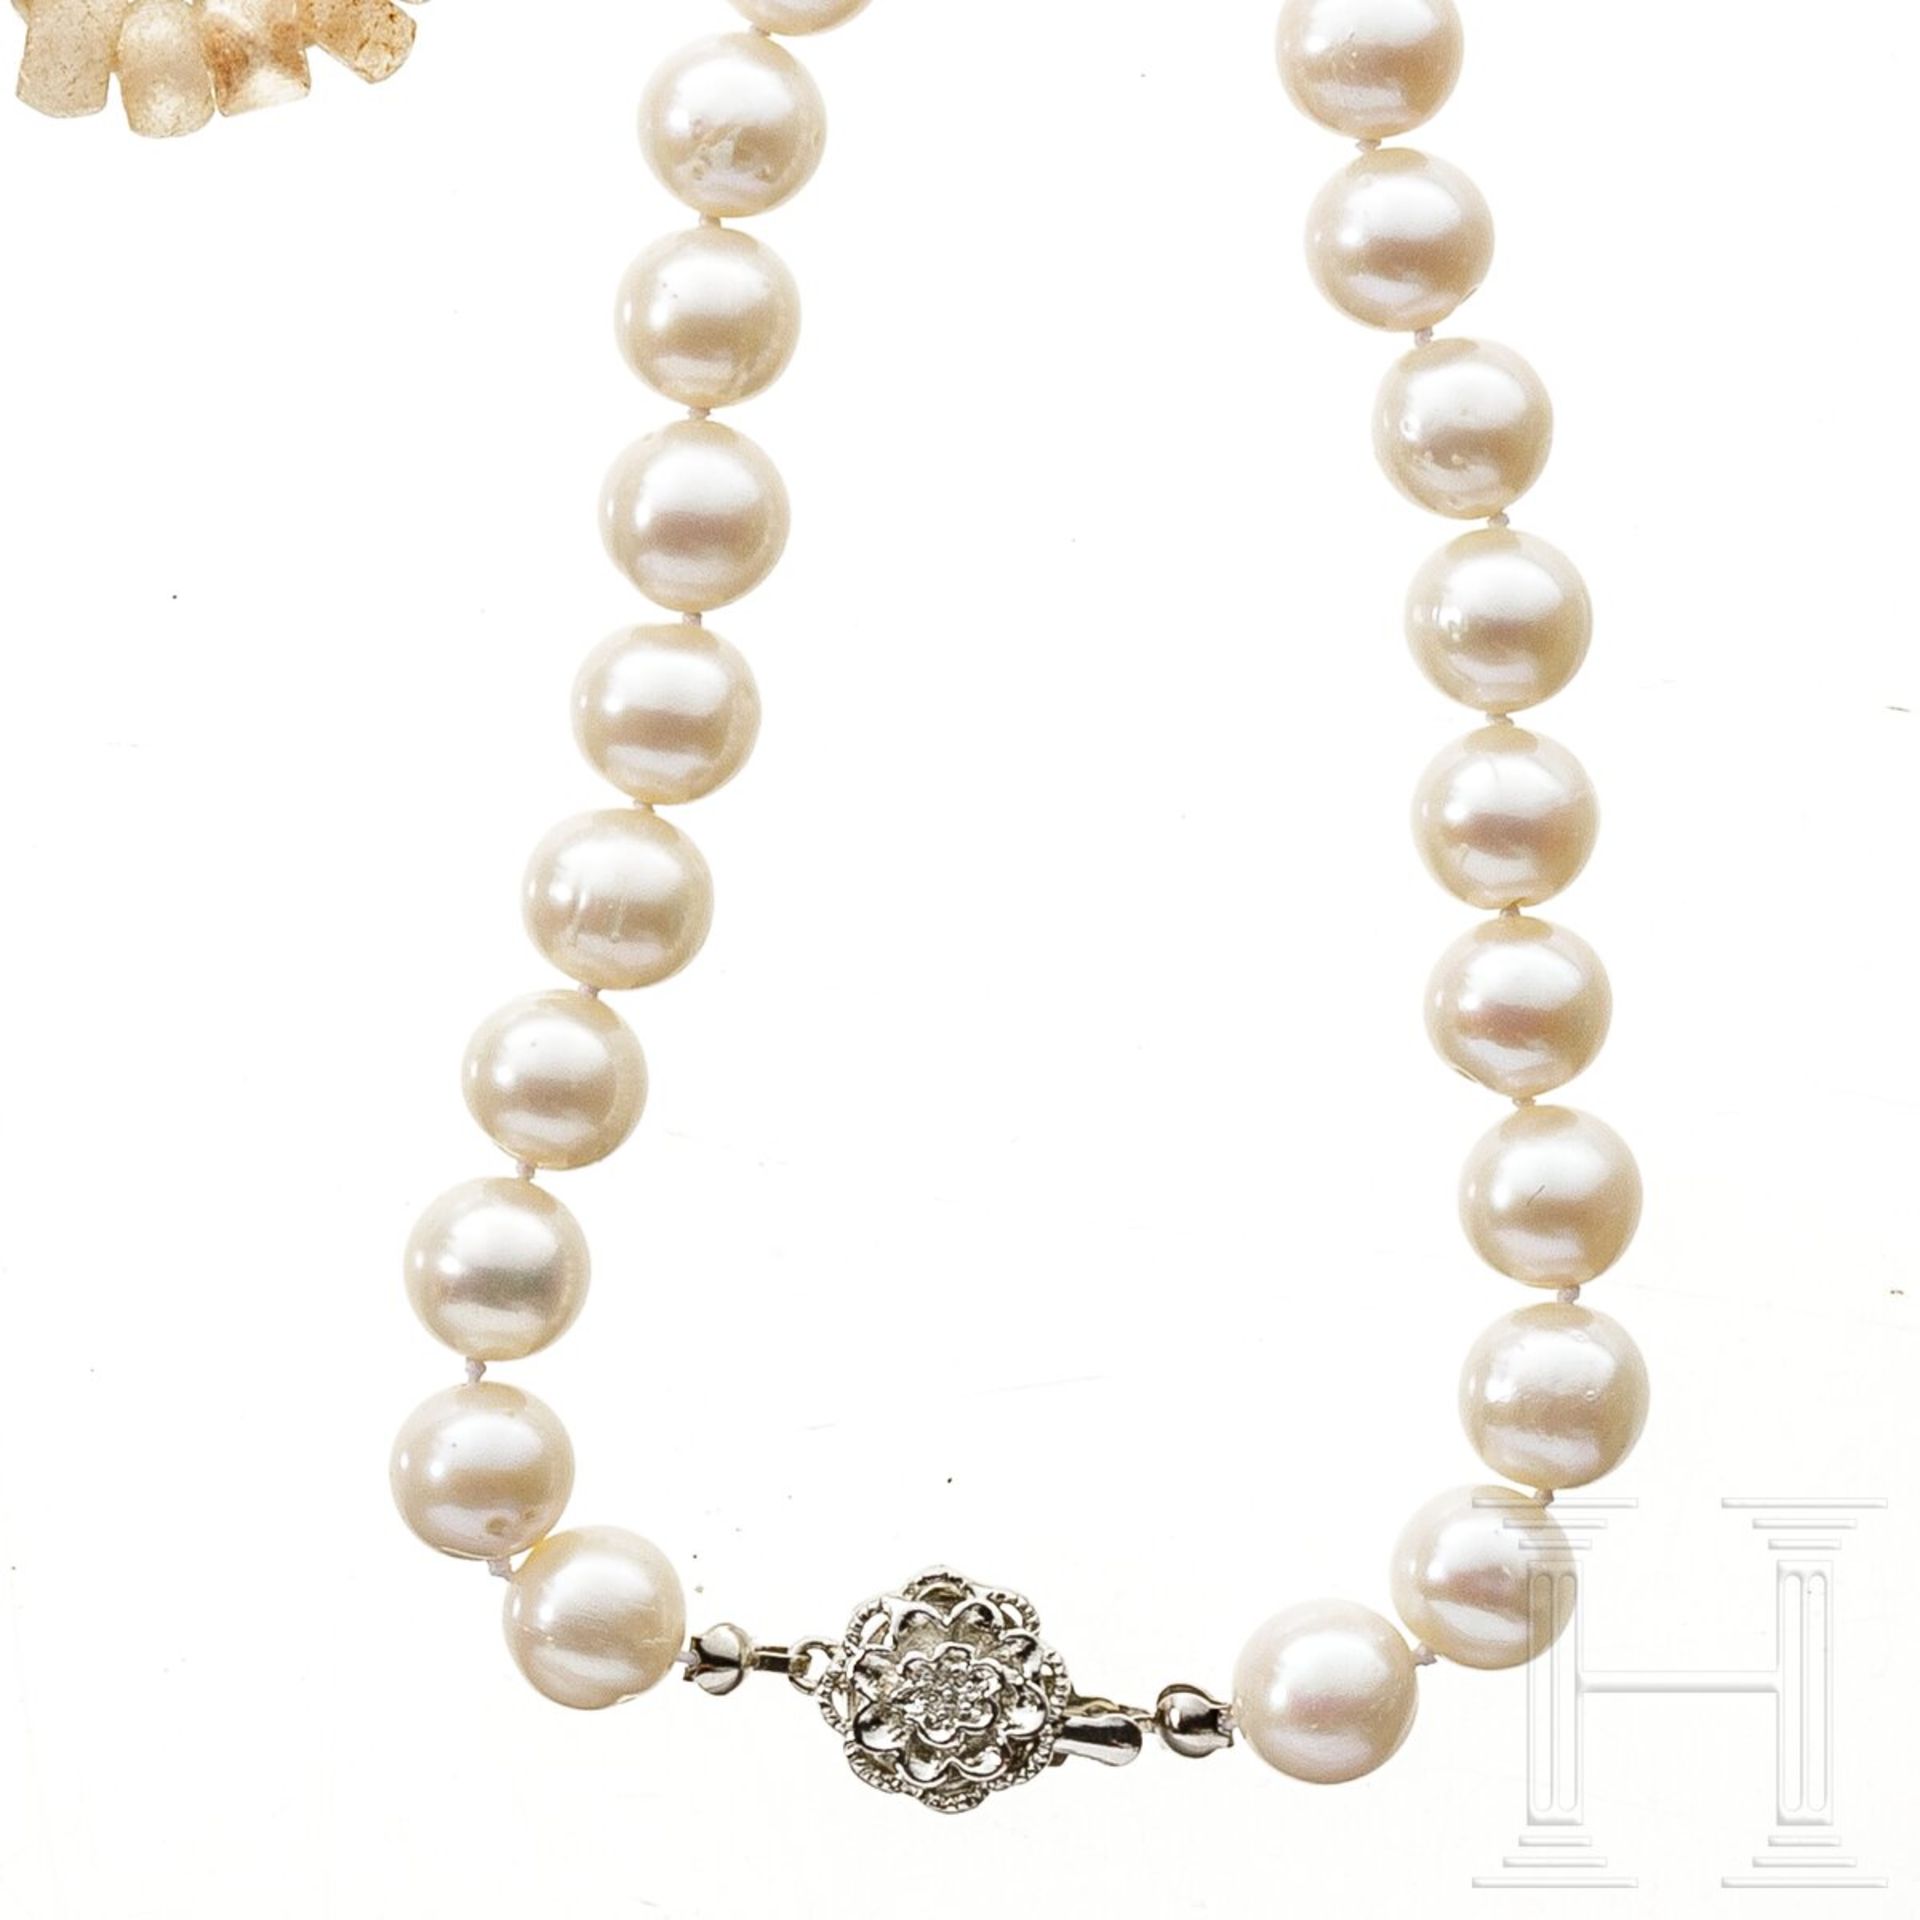 Zwei Perlenketten - Image 3 of 3